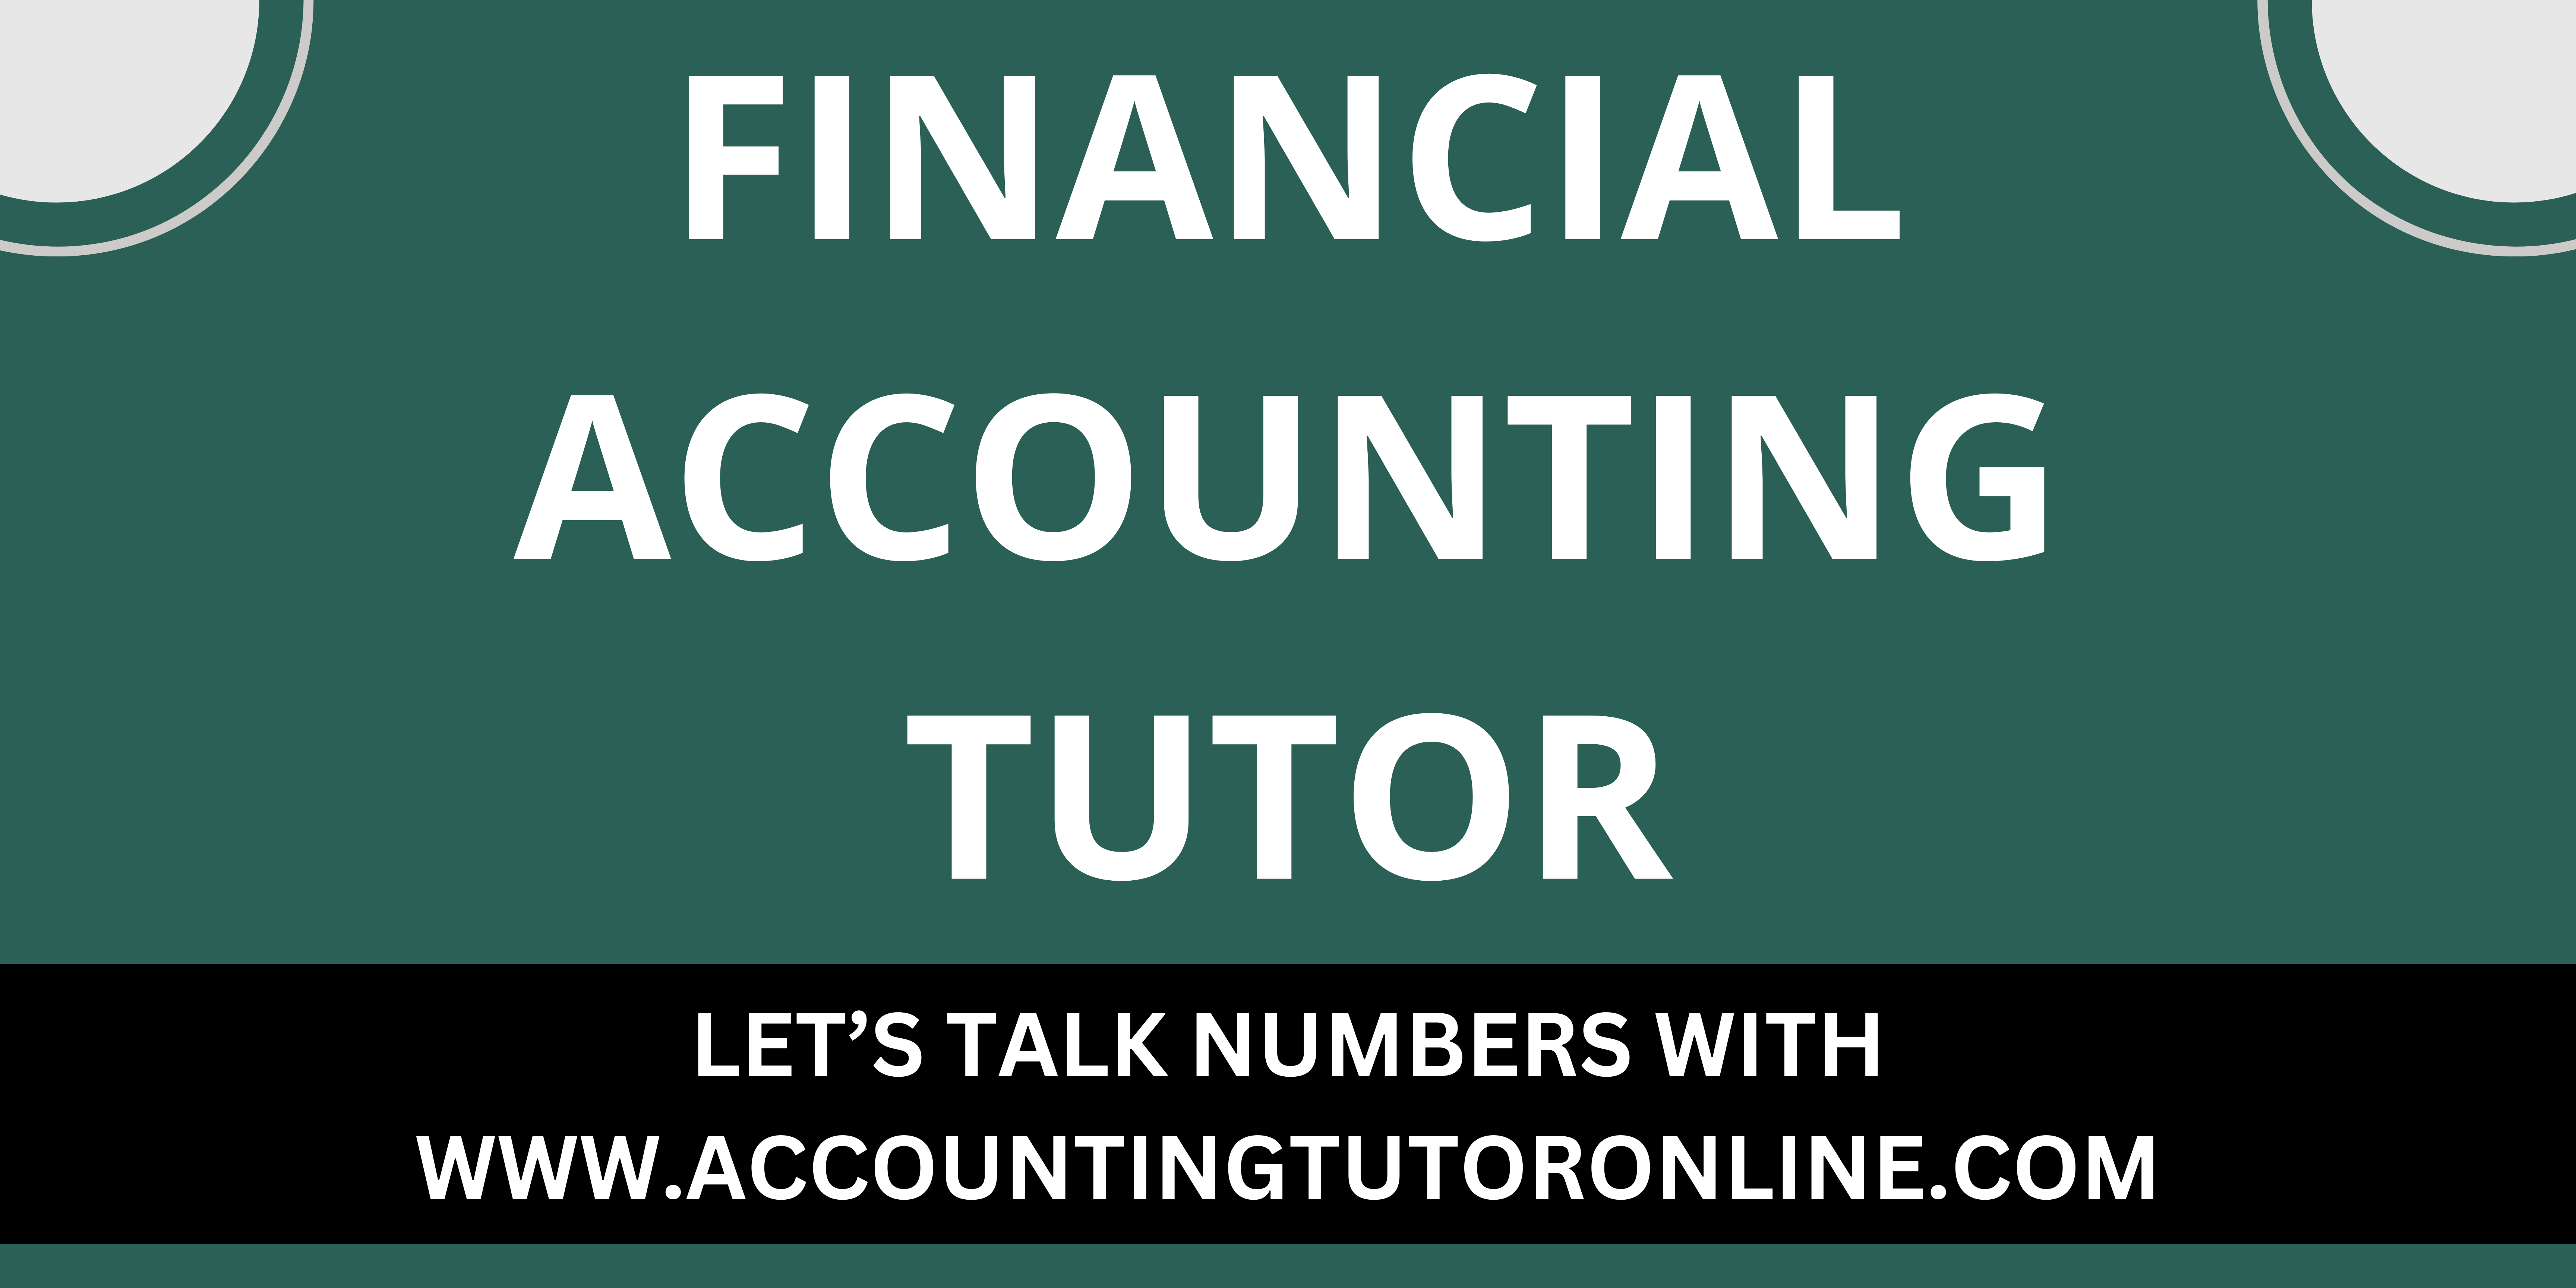 Financial Accounting tutor near me